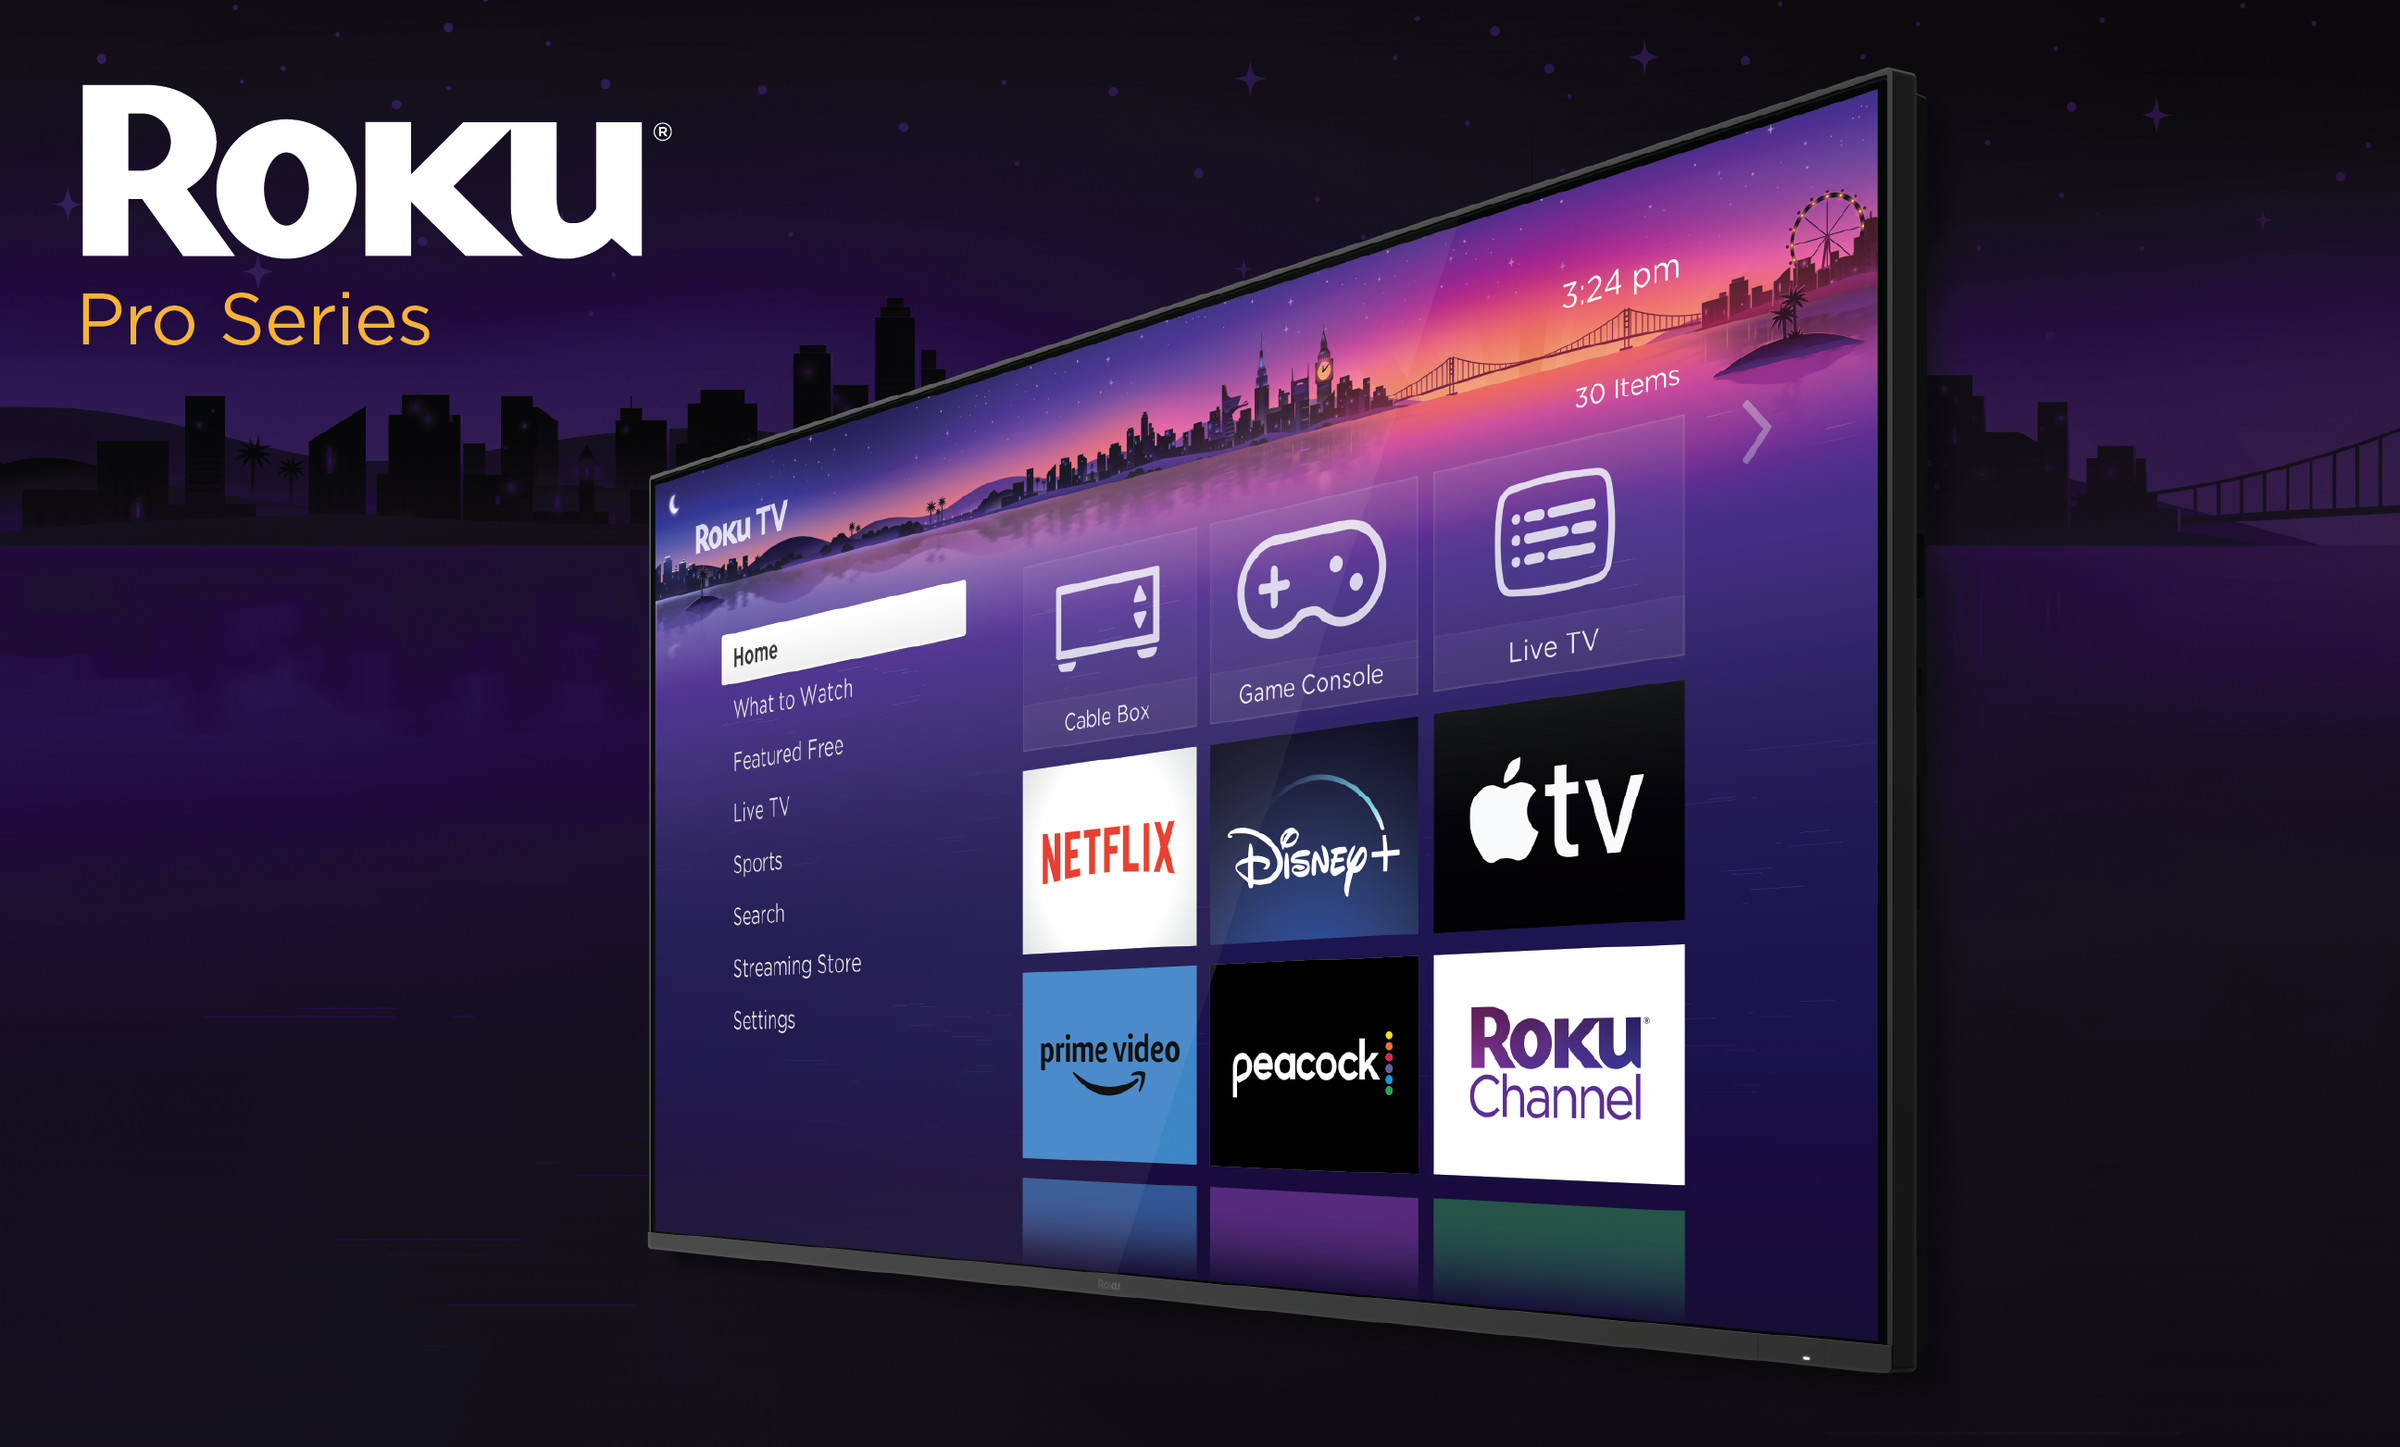 A marketing image of the Roku Pro TV.